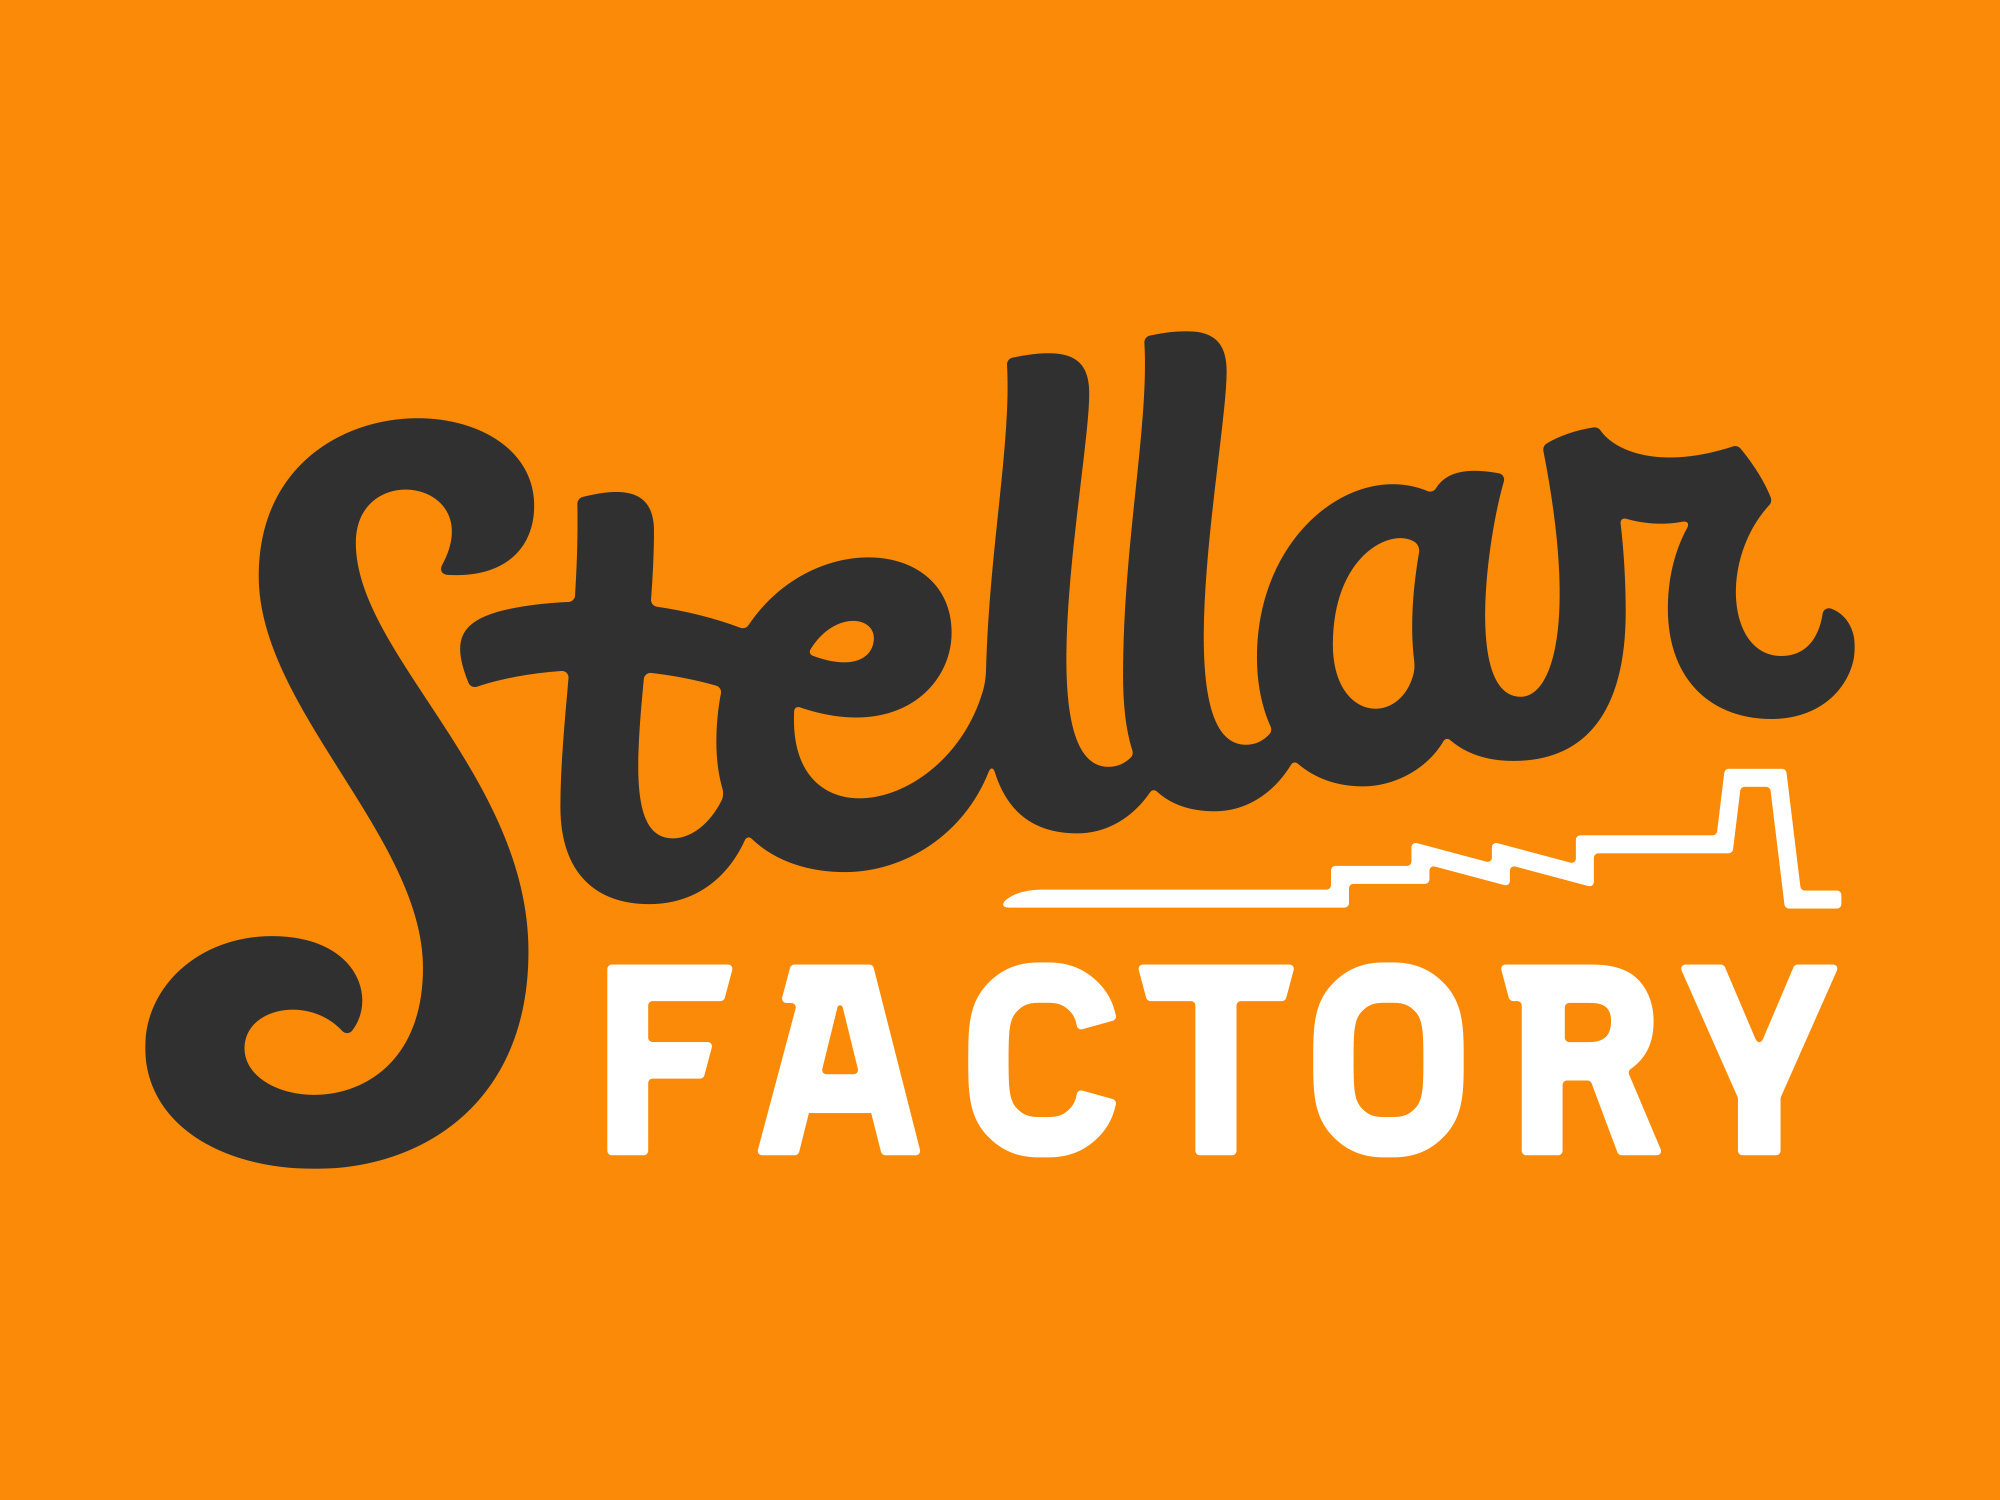 Stellar Factory Logo